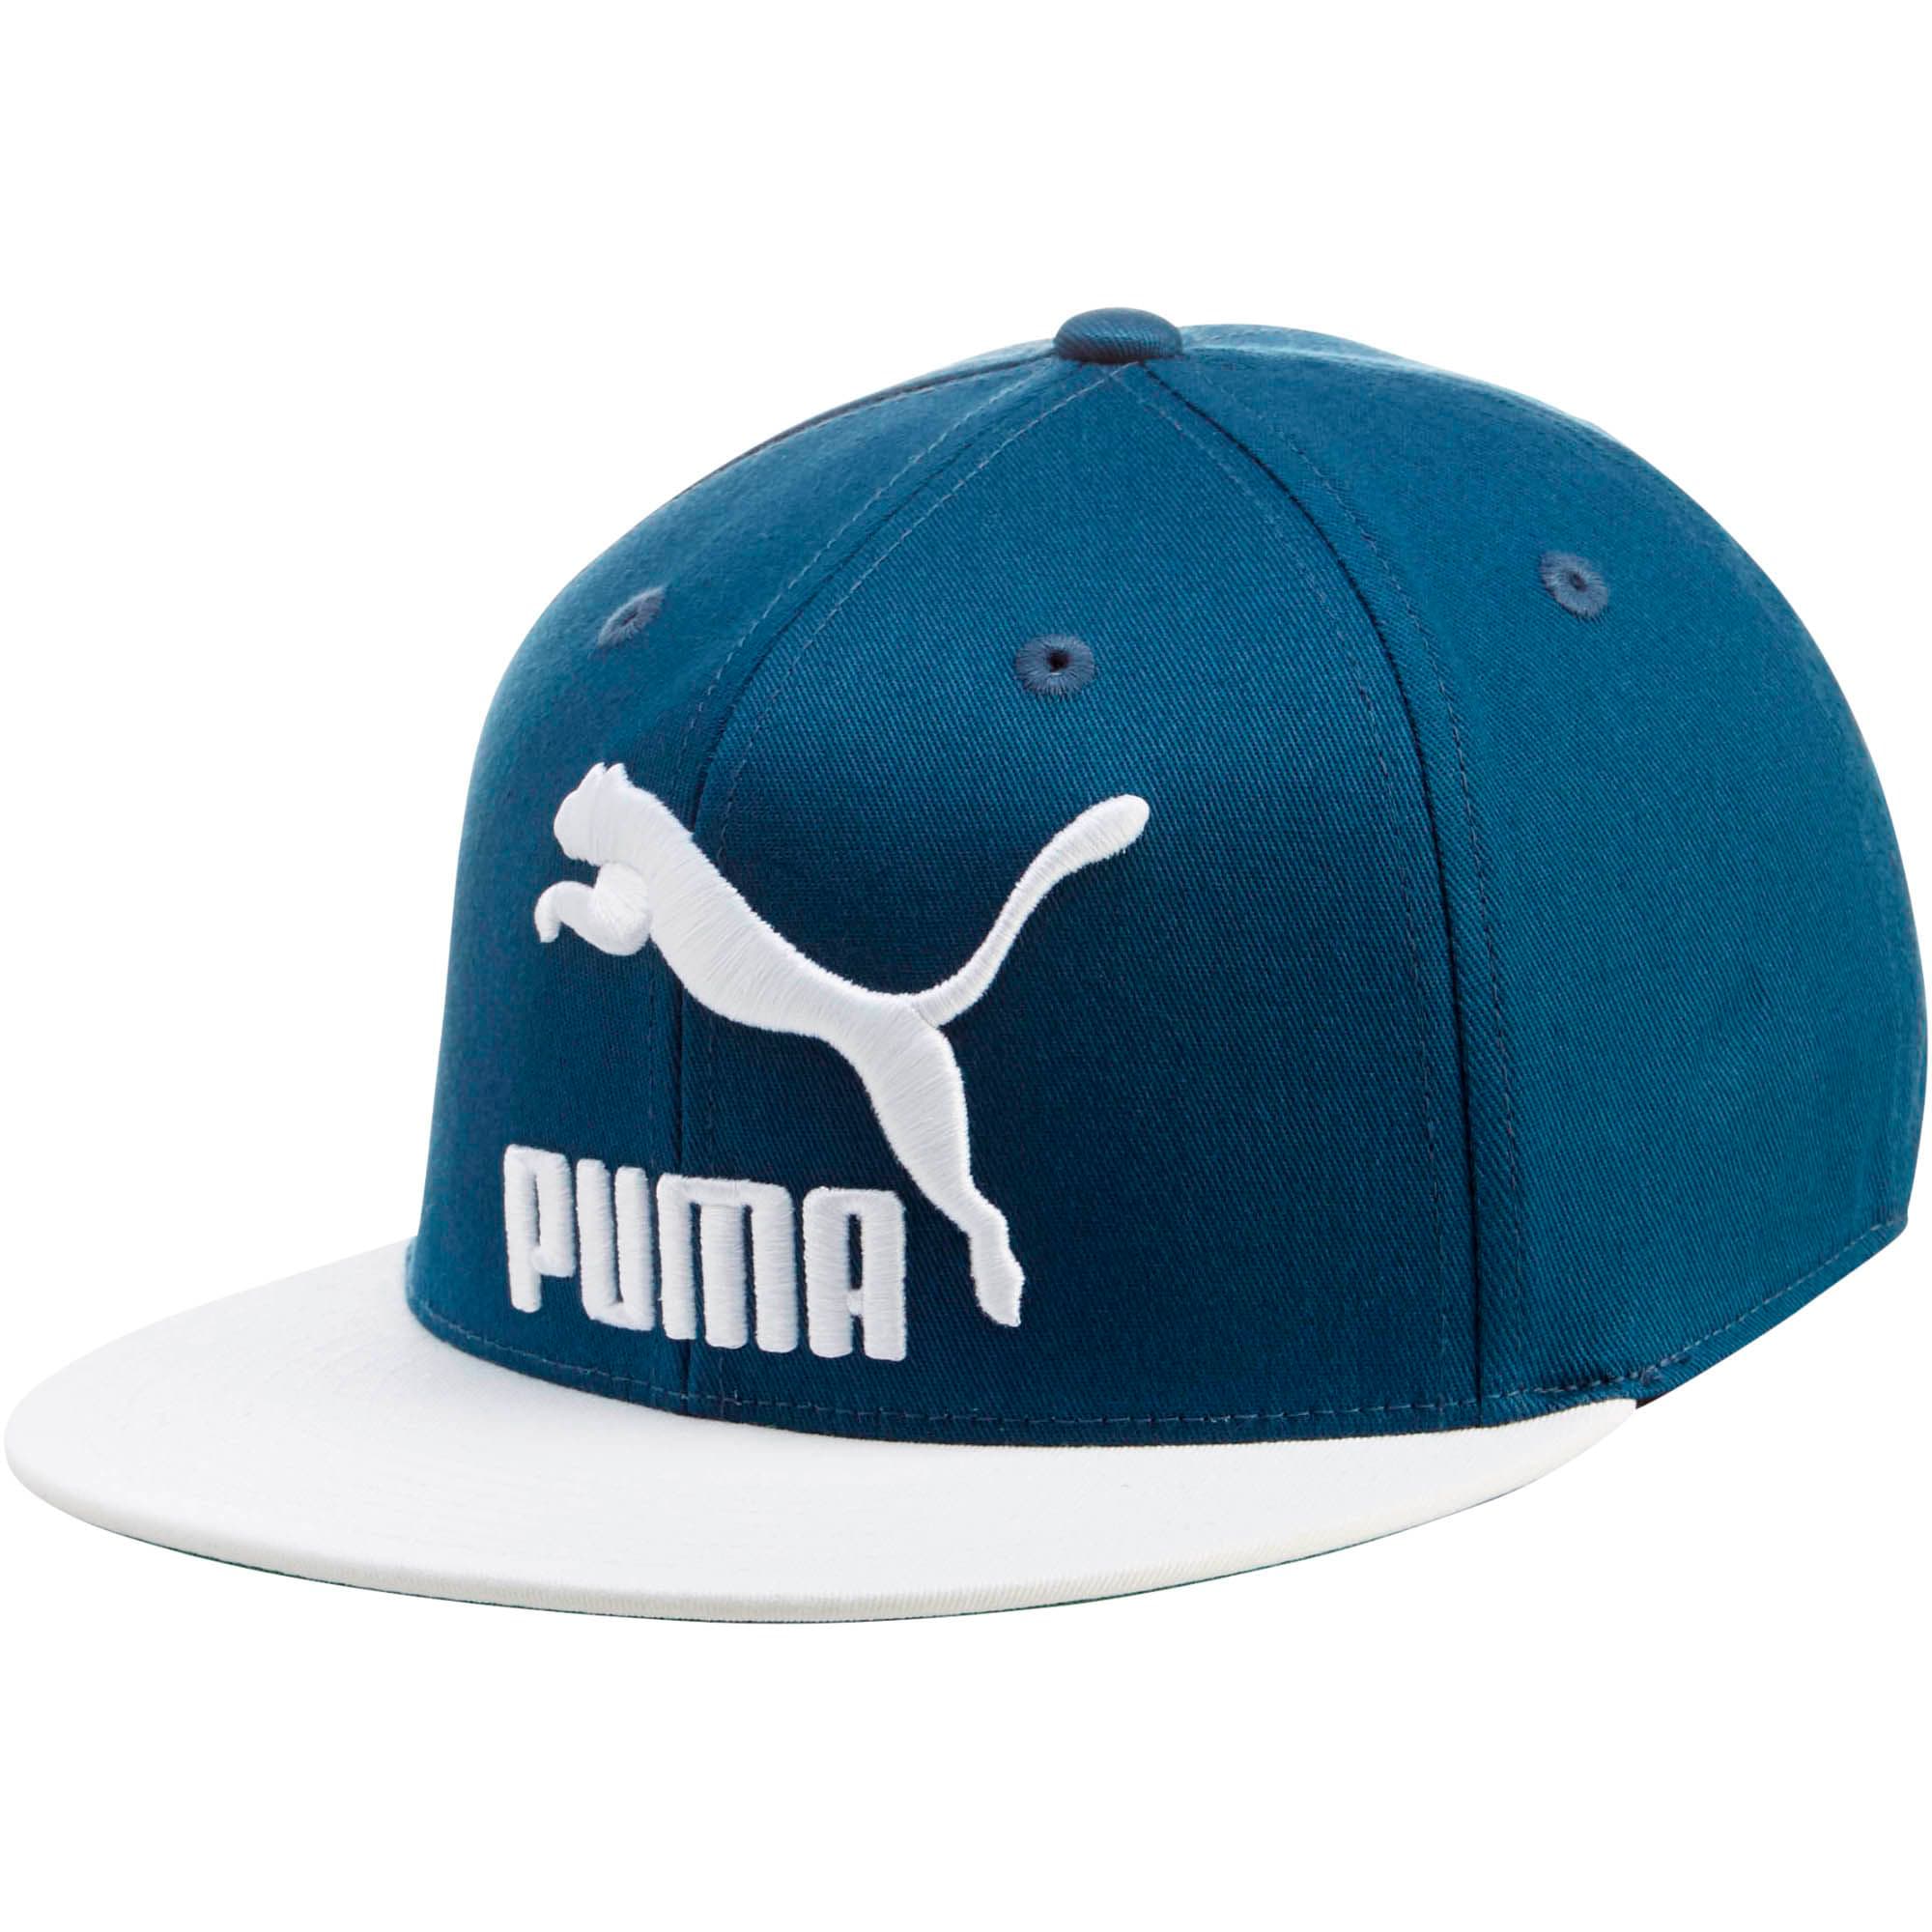 puma flat brim hat